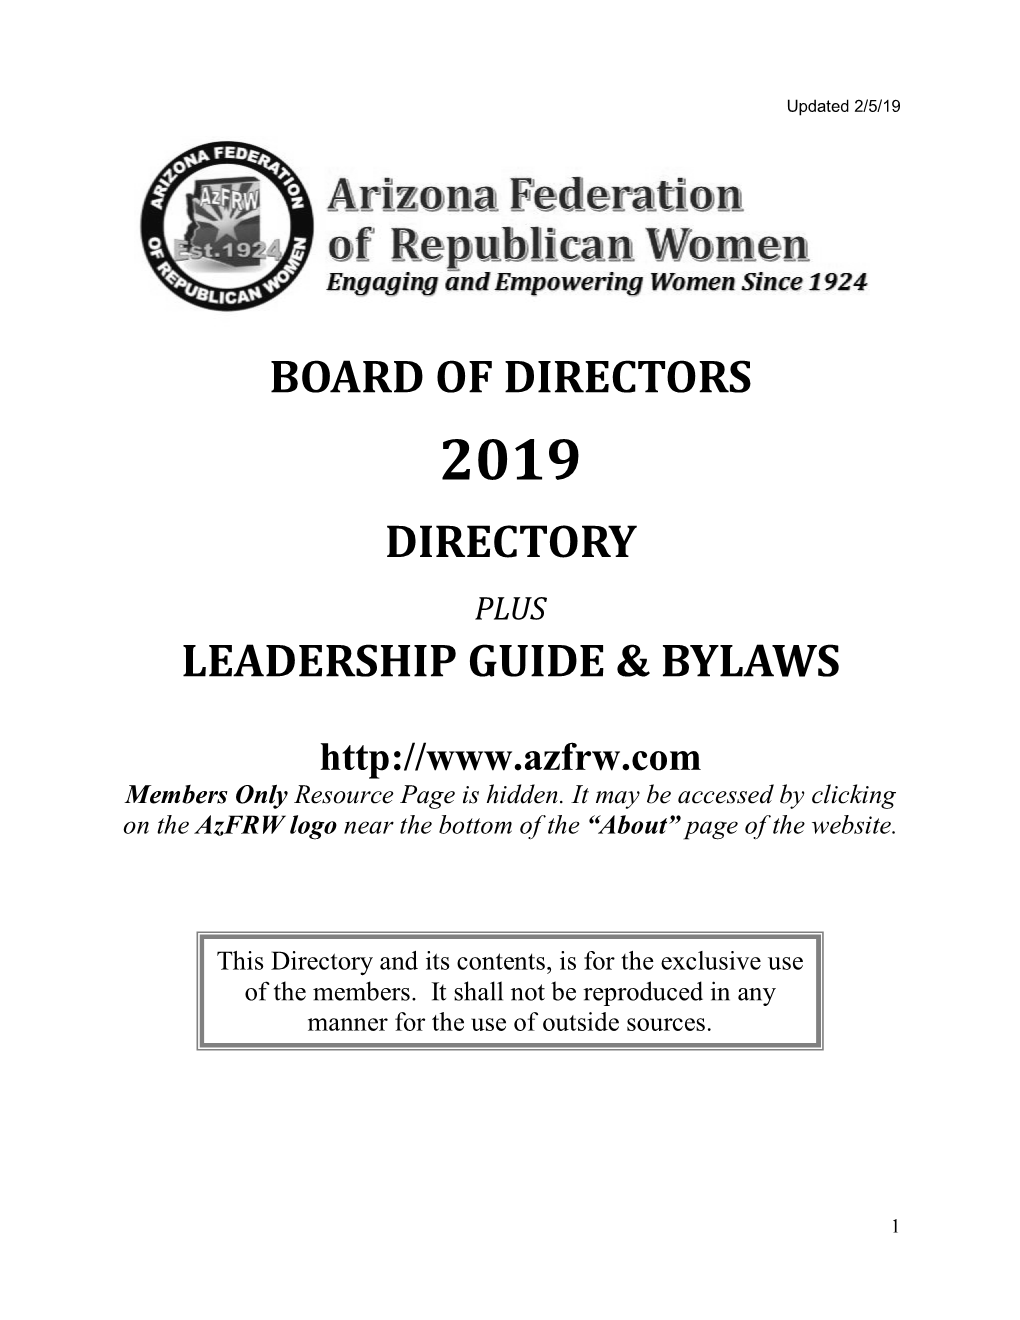 Board of Directors Directory Leadership Guide